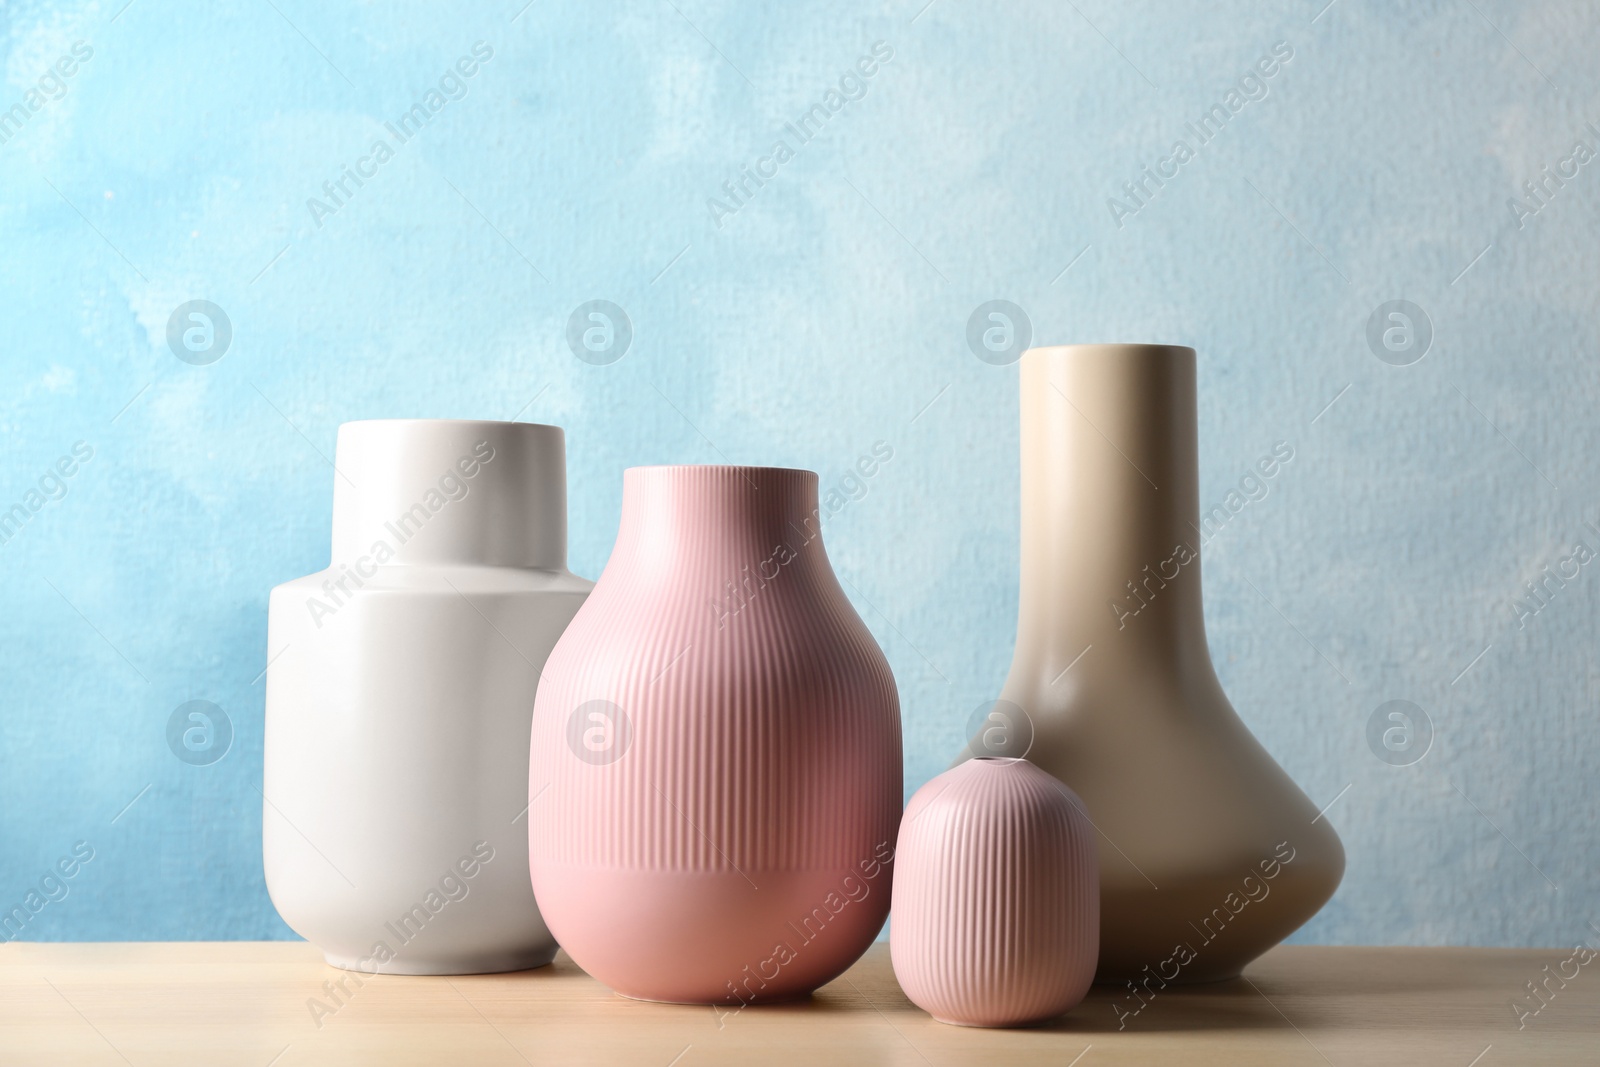 Photo of Stylish ceramic vases on wooden table against light blue background